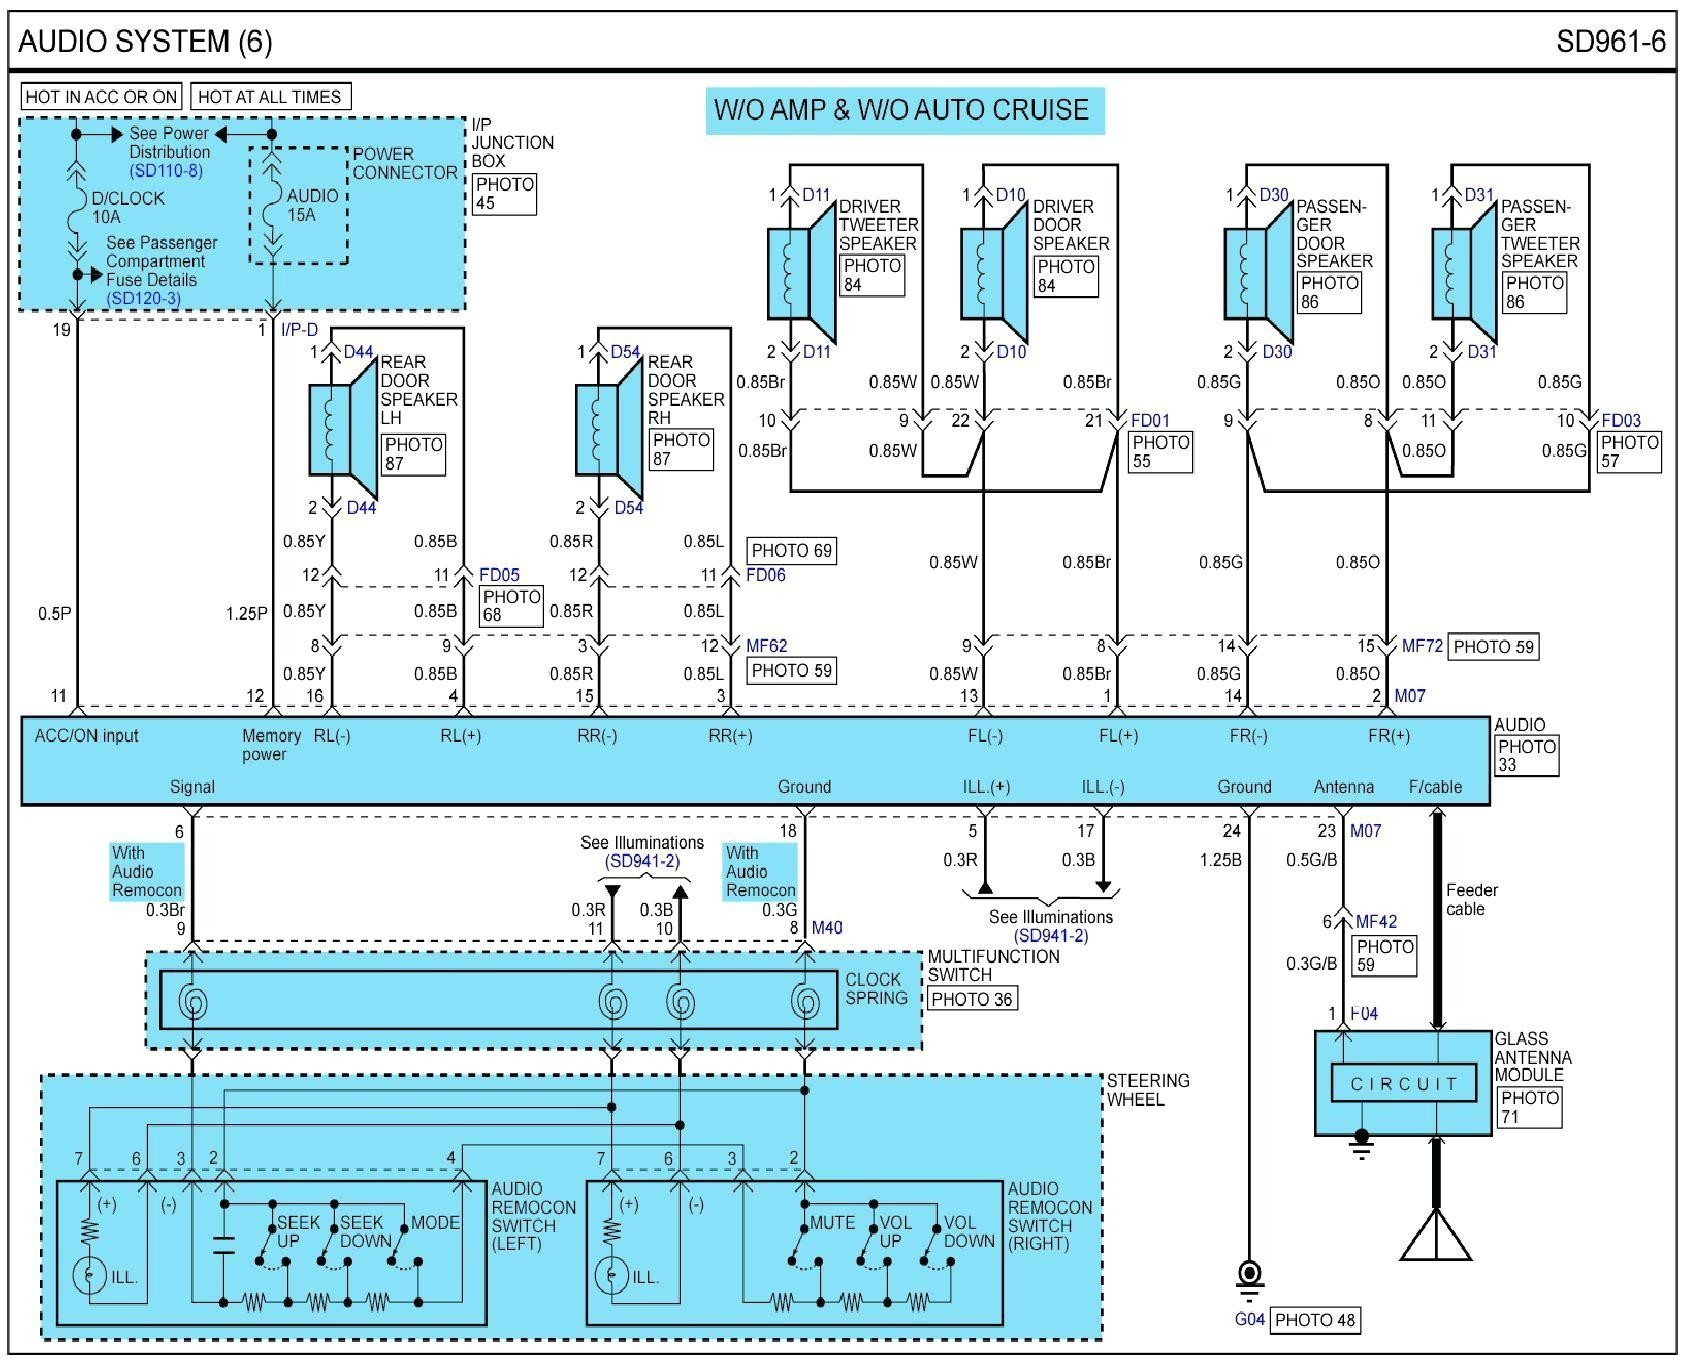 2003 Kia sorento Engine Wiring Harness Free Download Wiring Diagrams Kia sorento Wiring Schematic Library